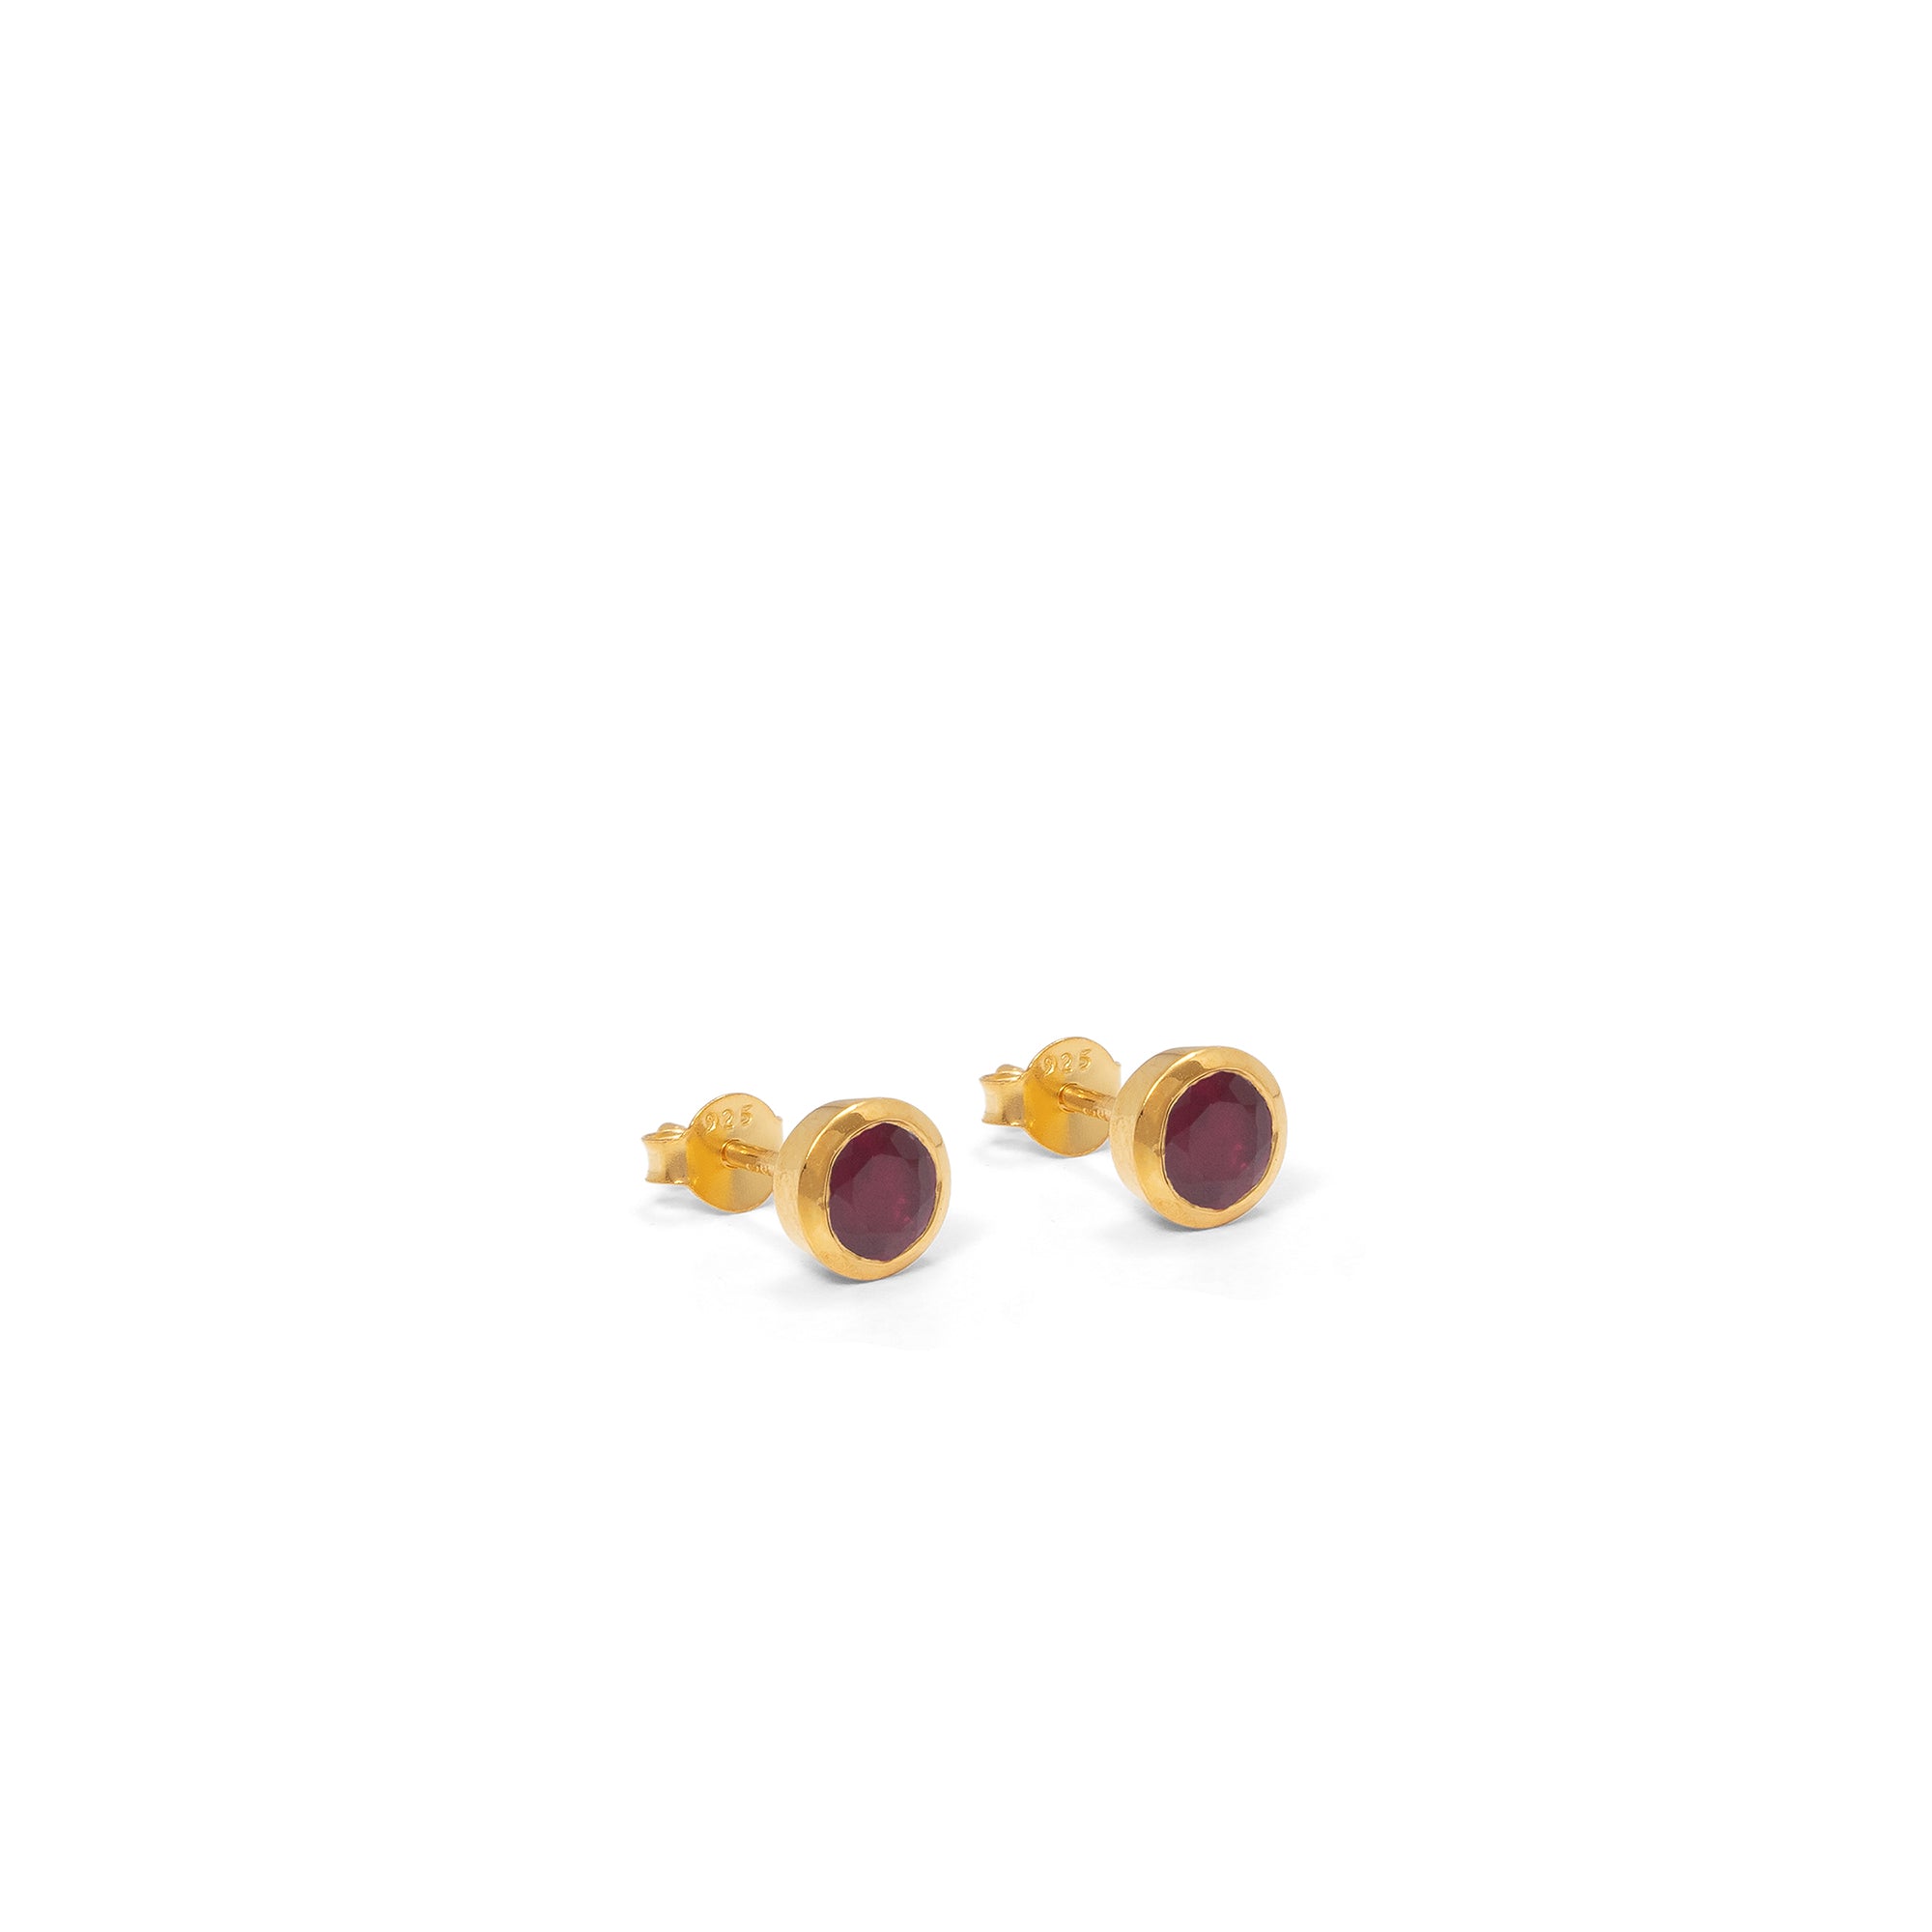 Birthstone Stud Earrings July: Ruby and Gold Vermeil